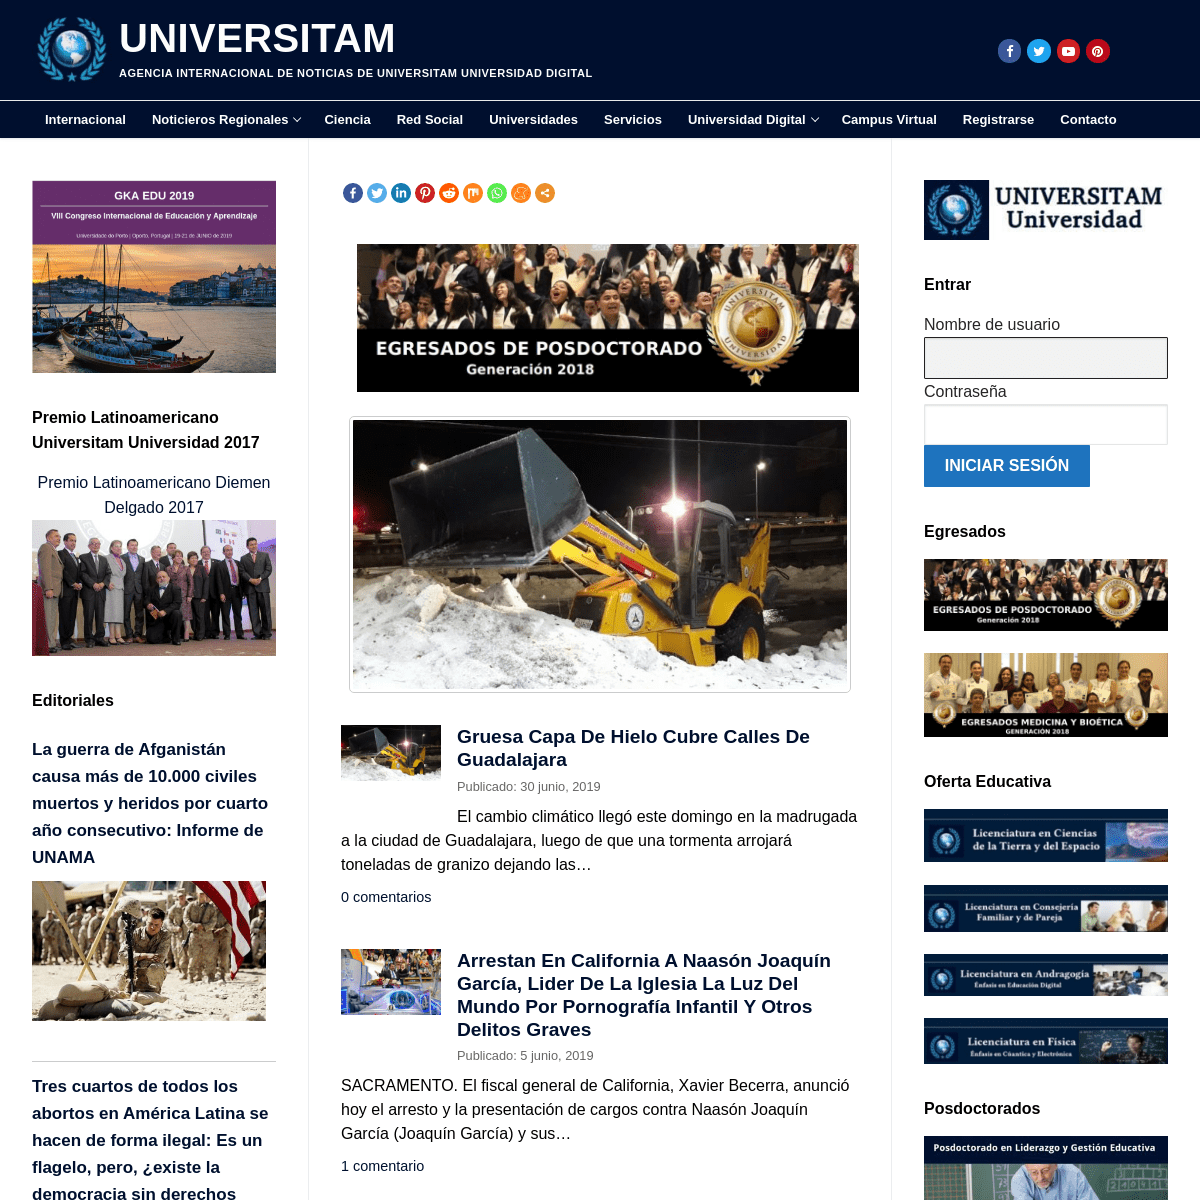 A complete backup of universitam.com